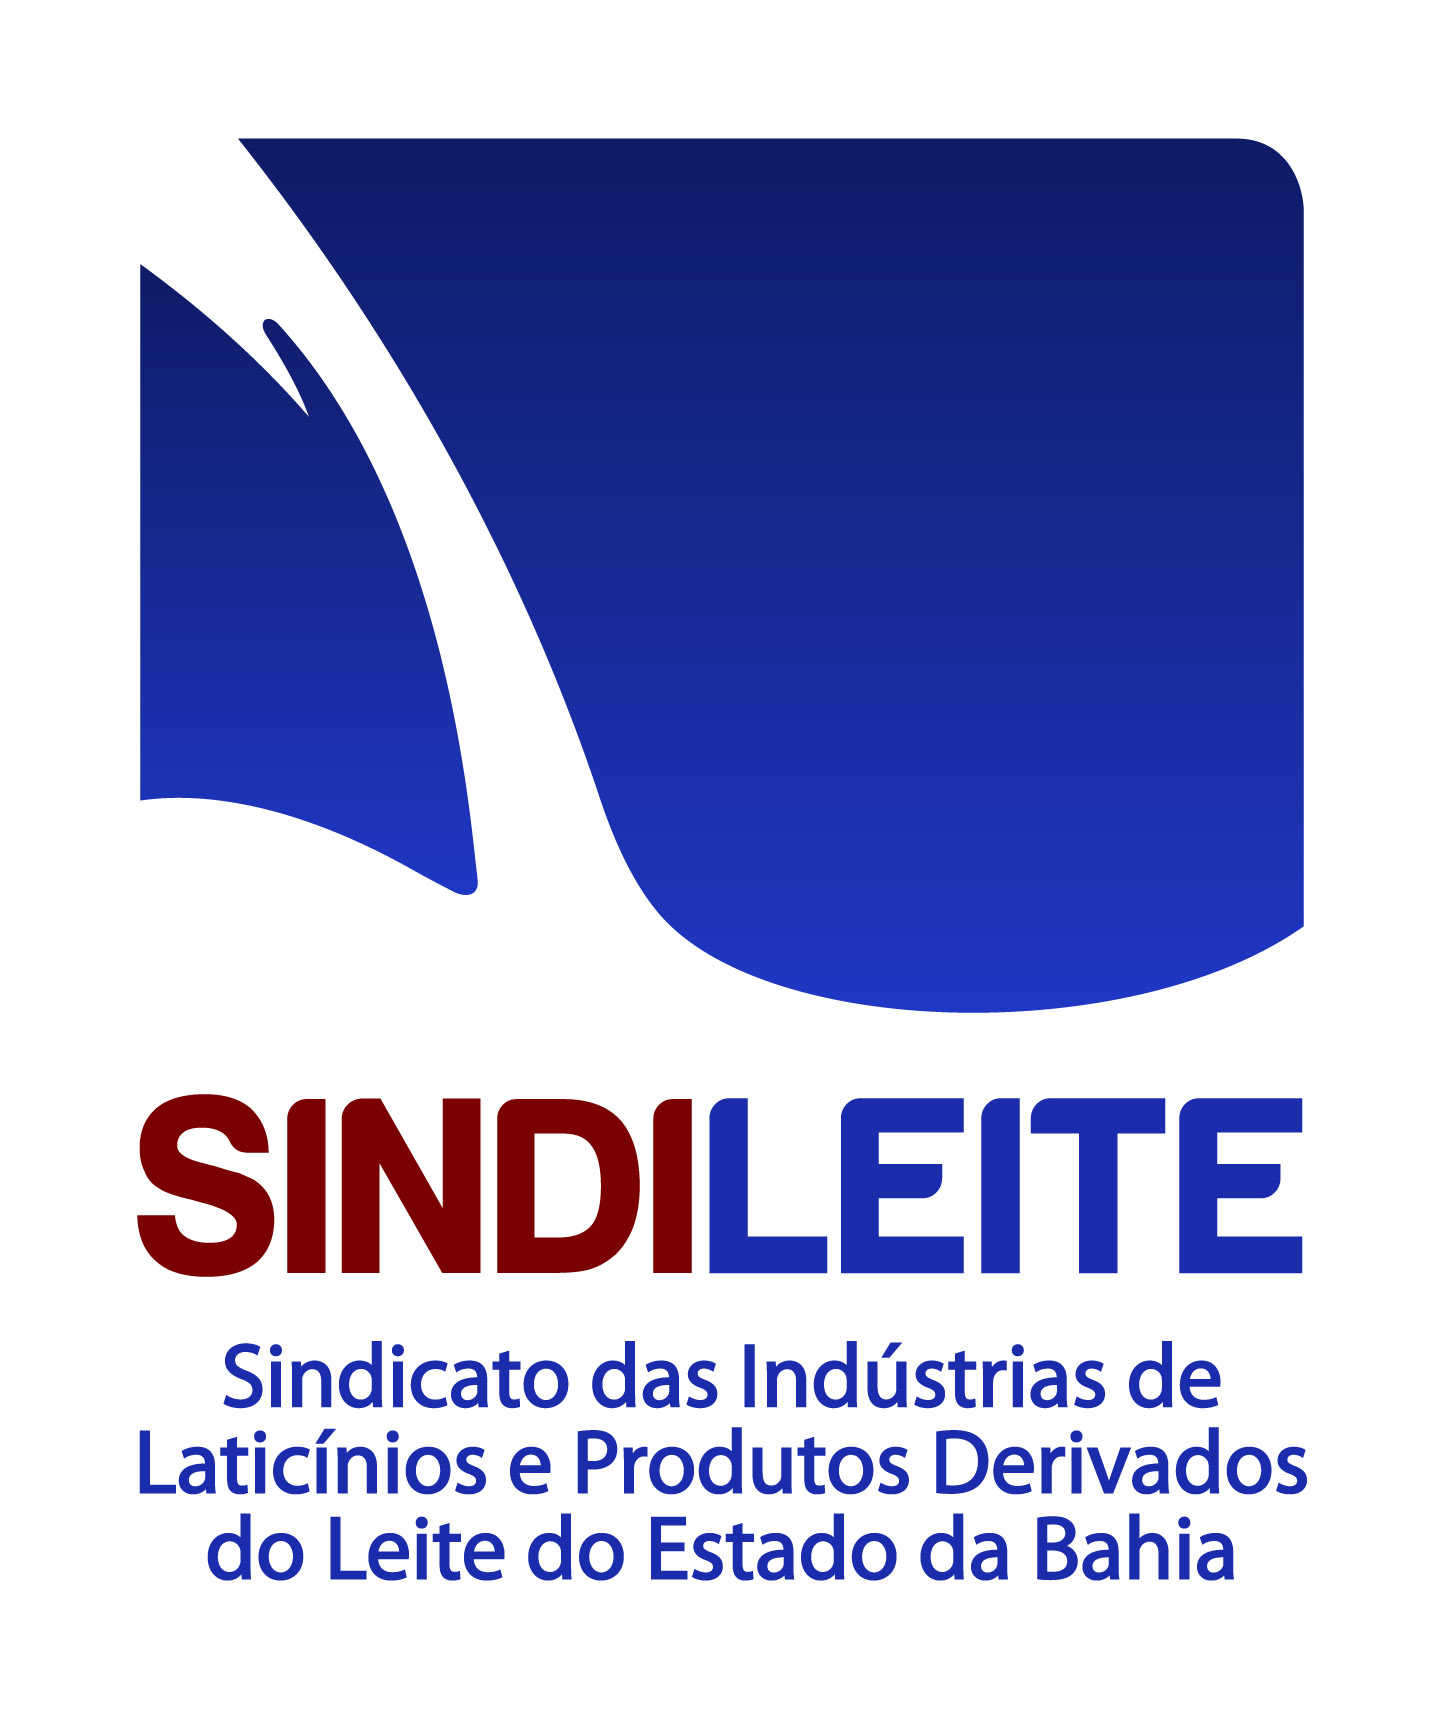 Sindicato das Indústrias de Laticínios e Produtos Derivados do Leite do Estado da Bahia